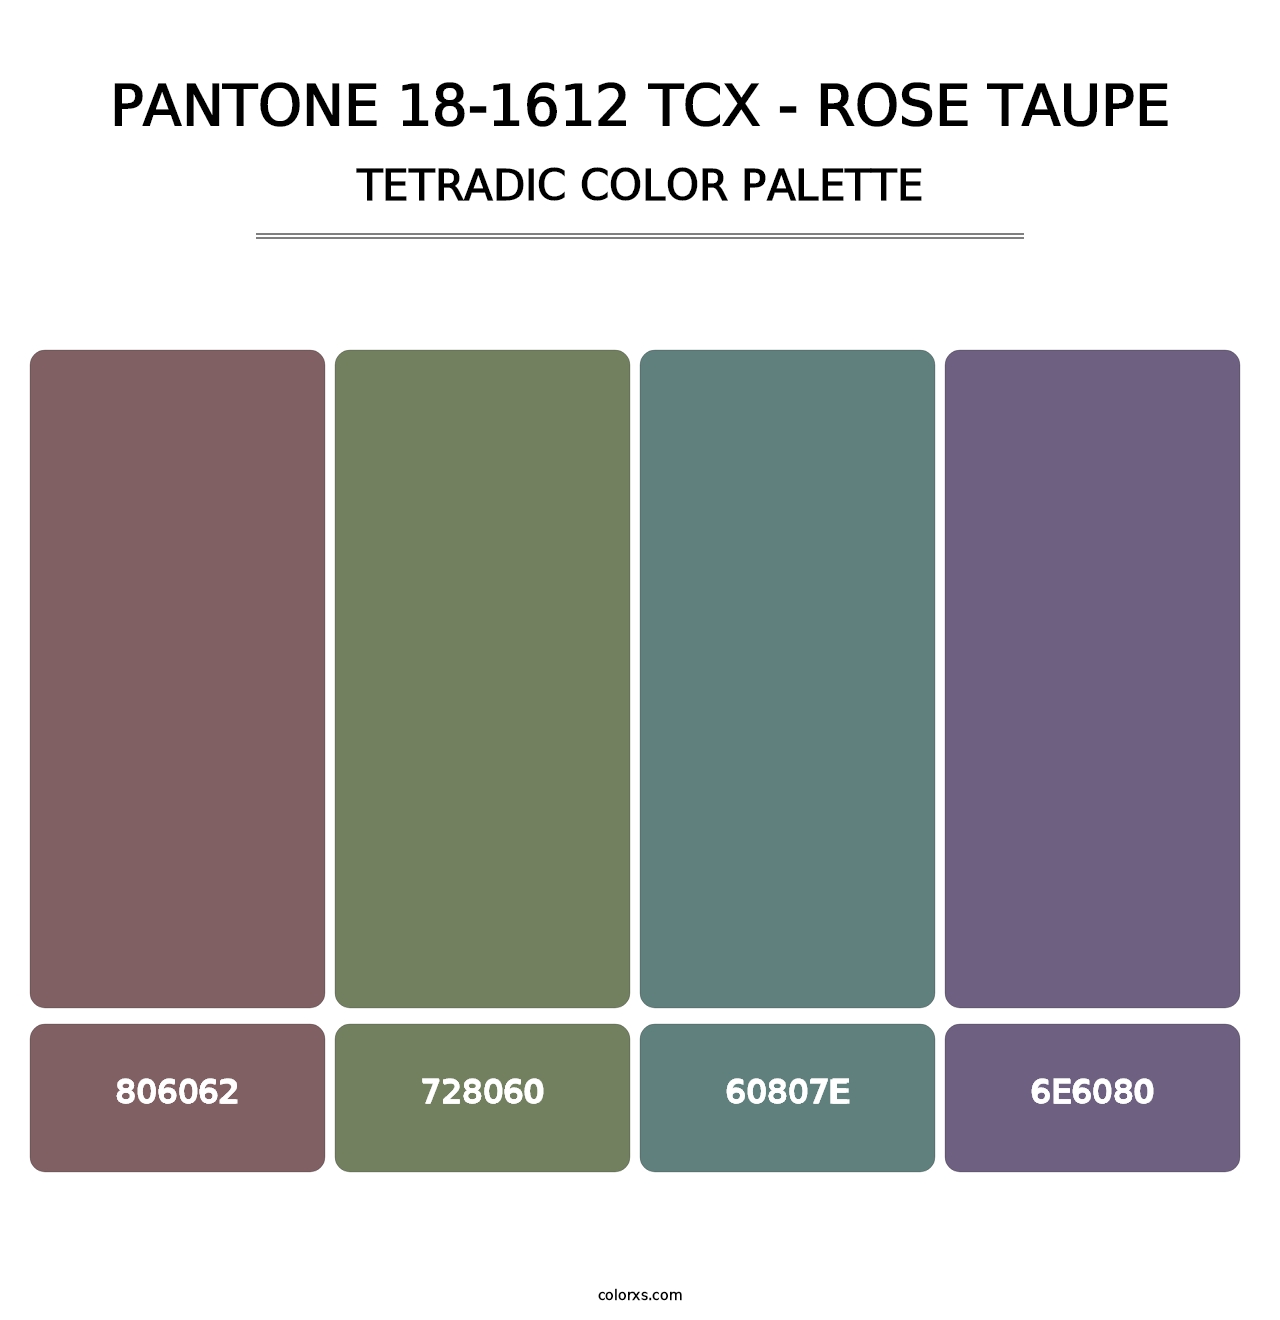 PANTONE 18-1612 TCX - Rose Taupe - Tetradic Color Palette